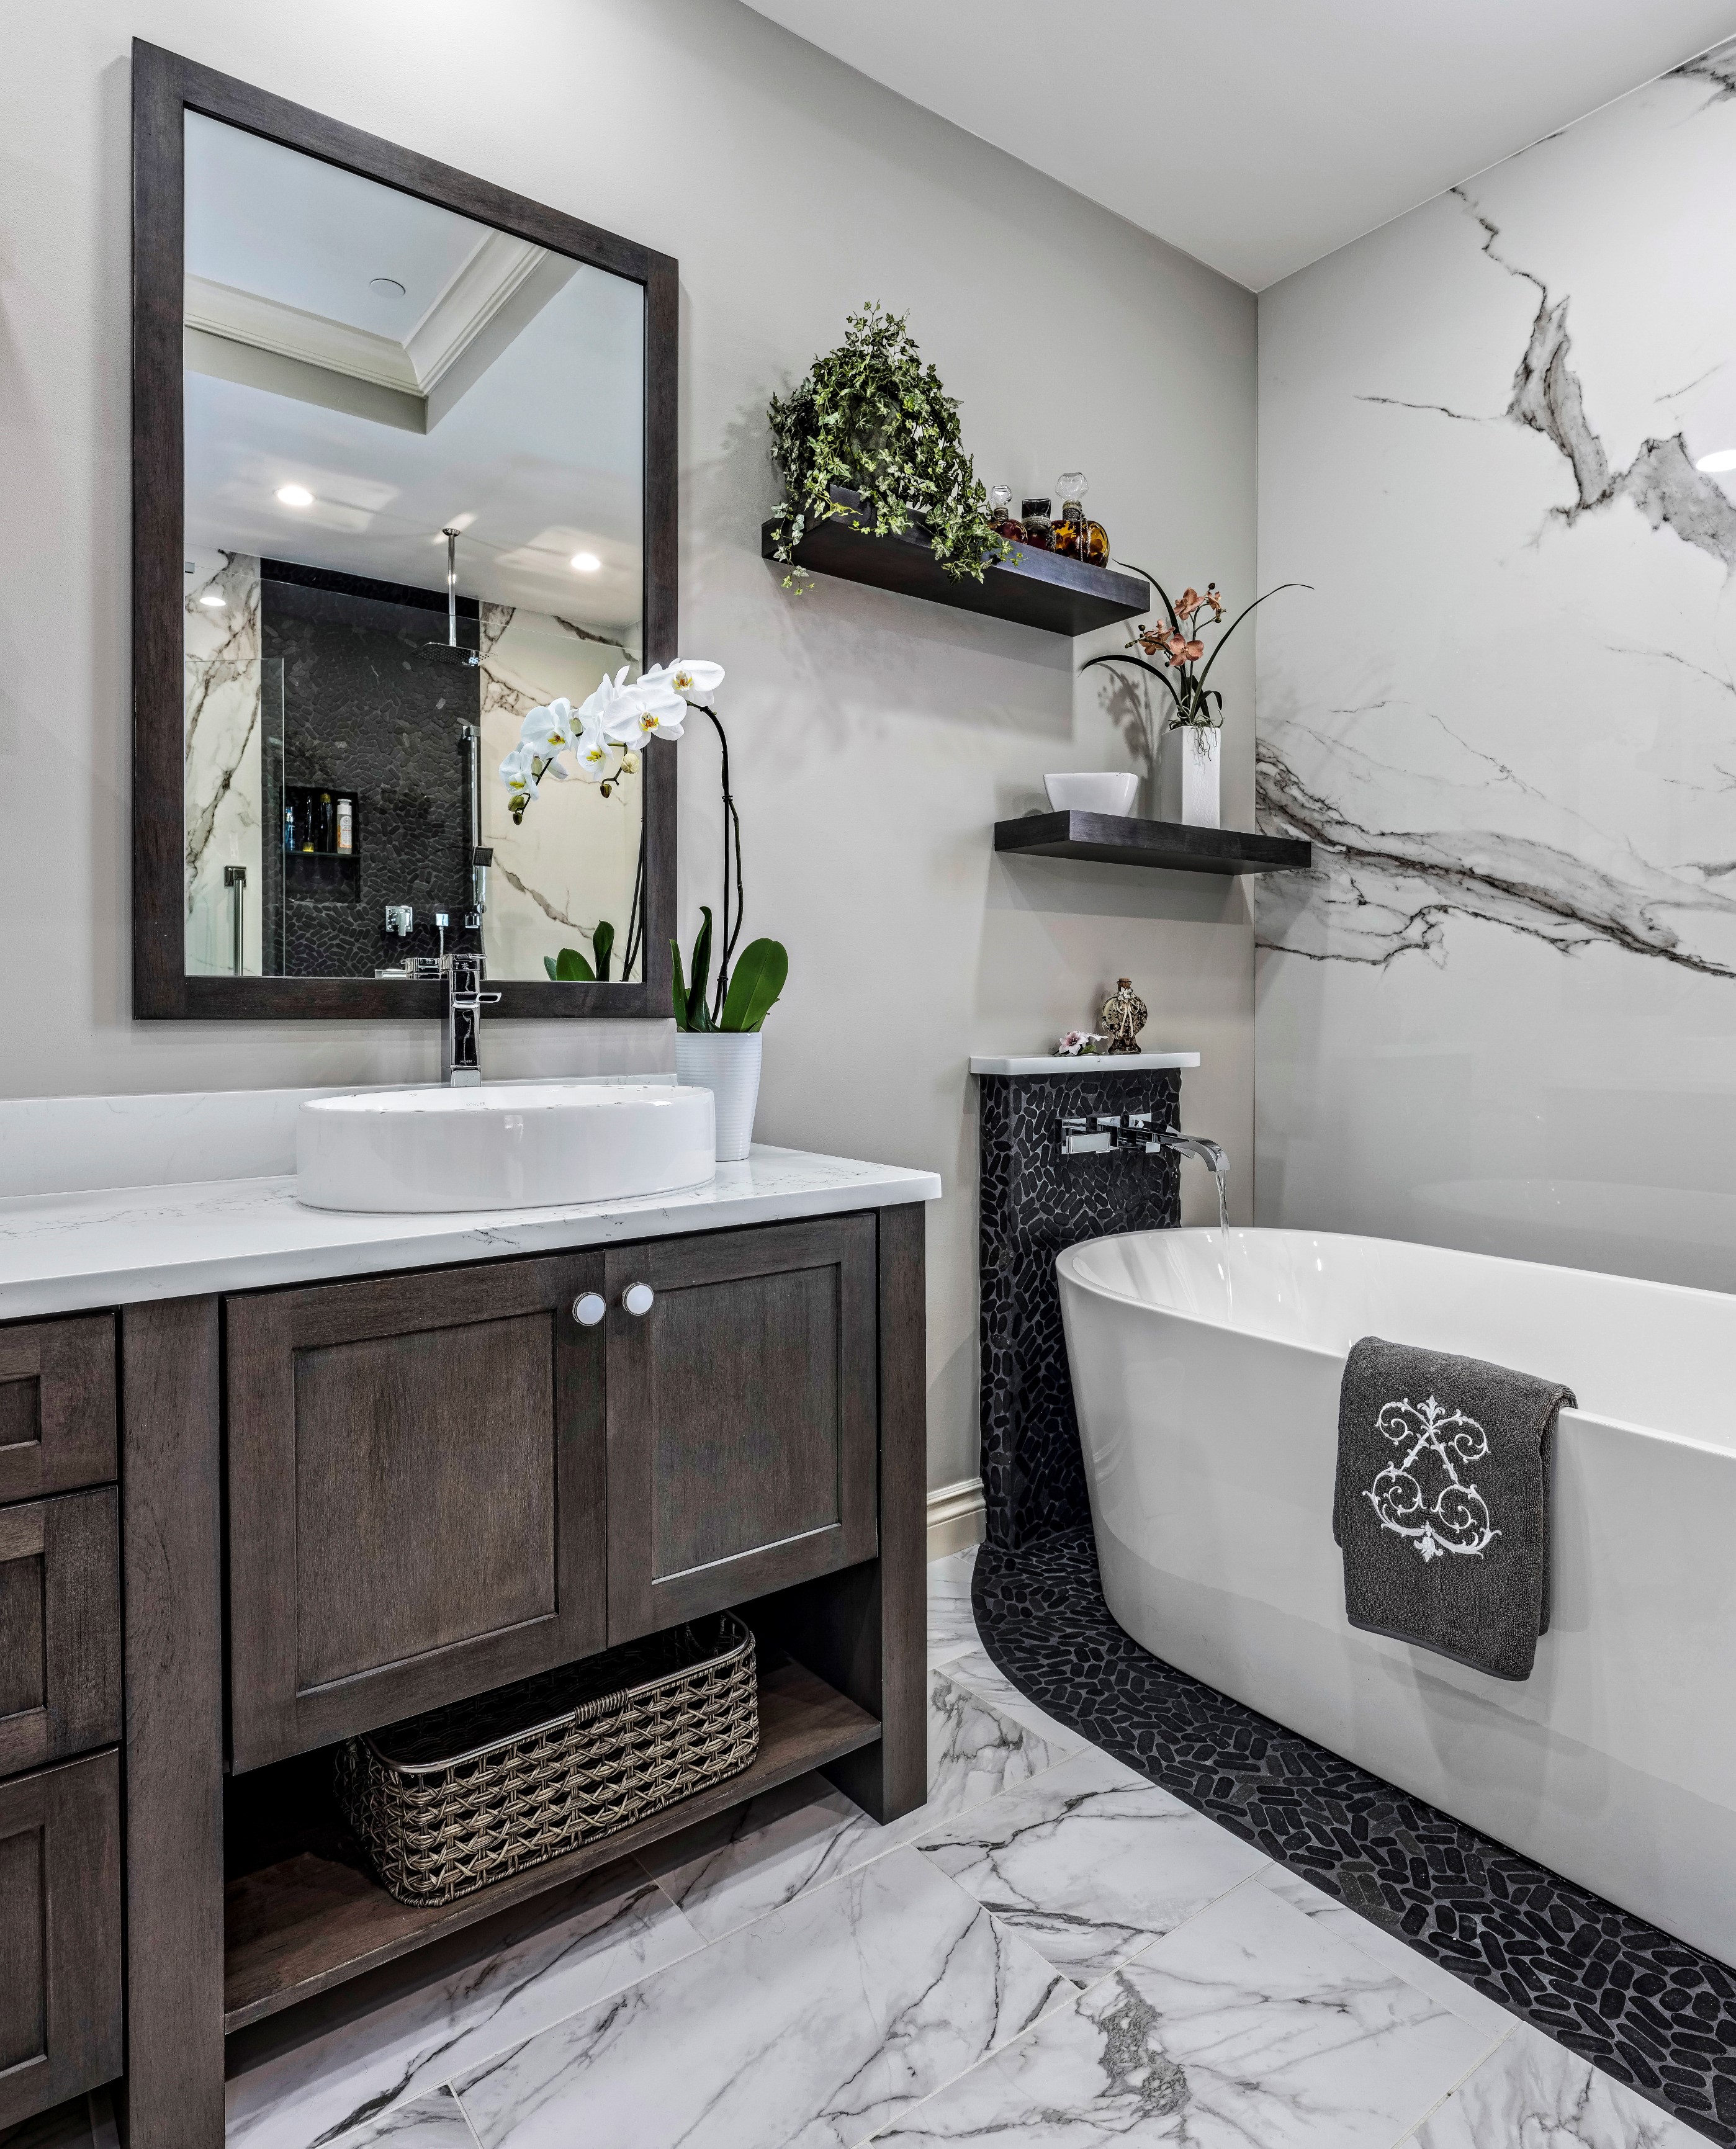 Bathroom Remodel Cost From Dreammaker, Average Cost Of Custom Bathroom Vanity